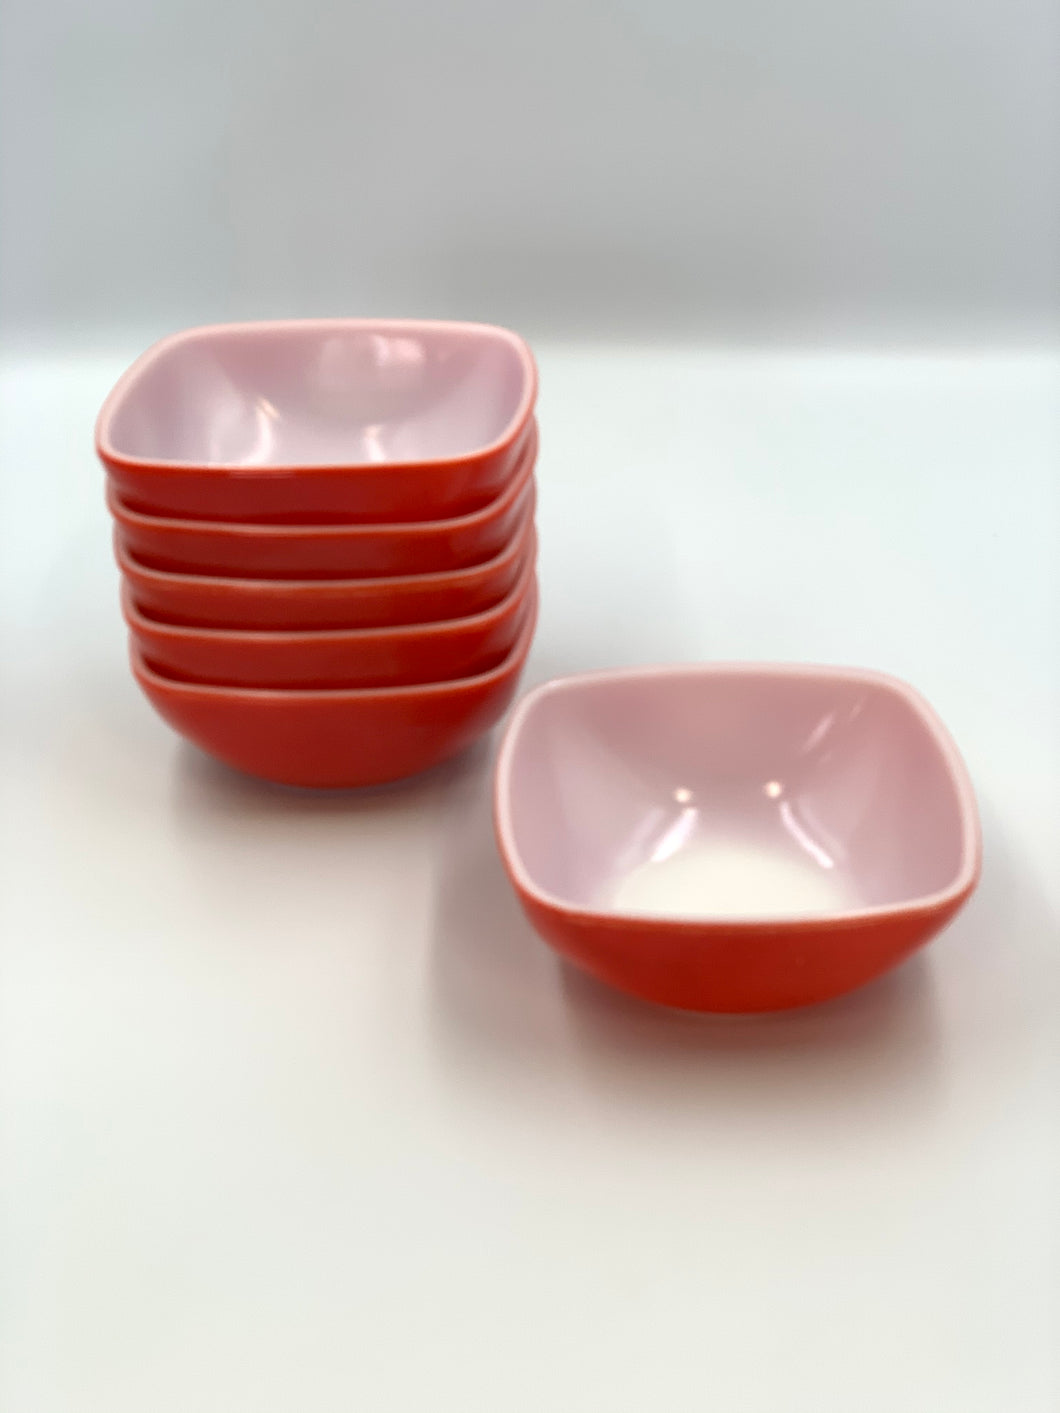 Red retro pyrex ramekin bowls